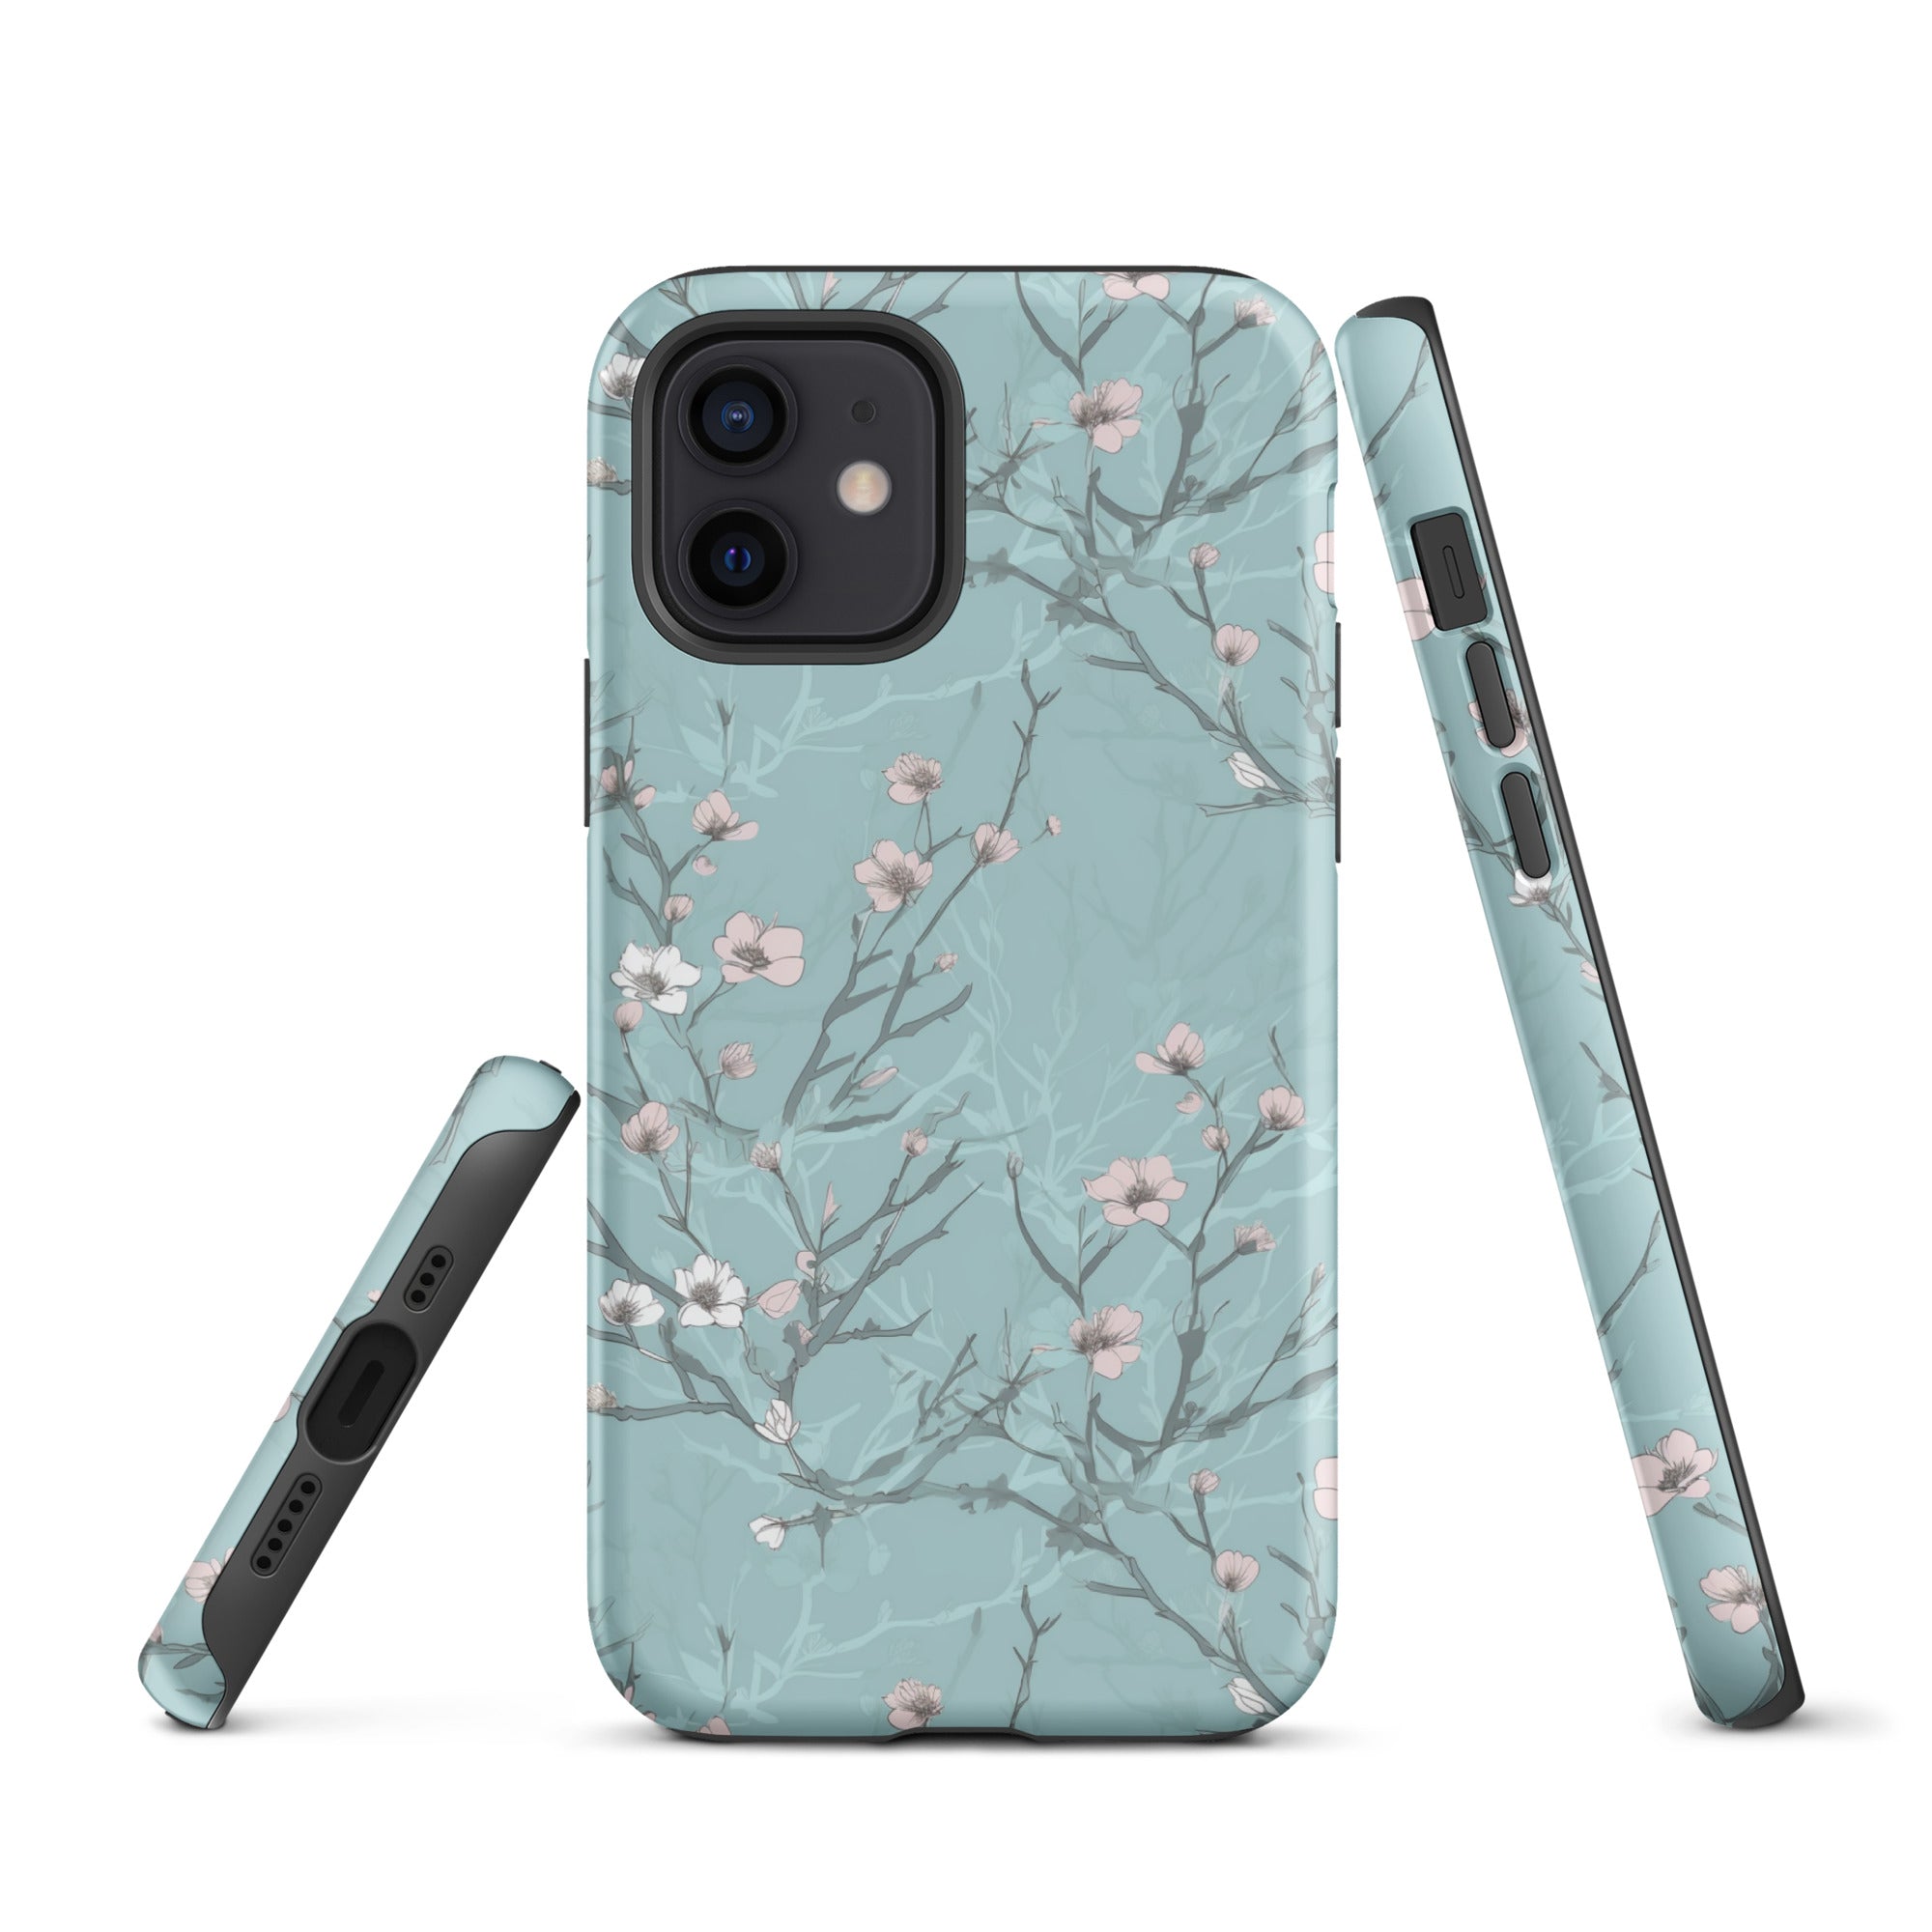 Sakura Serenity - Japanese Cherry Blossom - iPhone Case